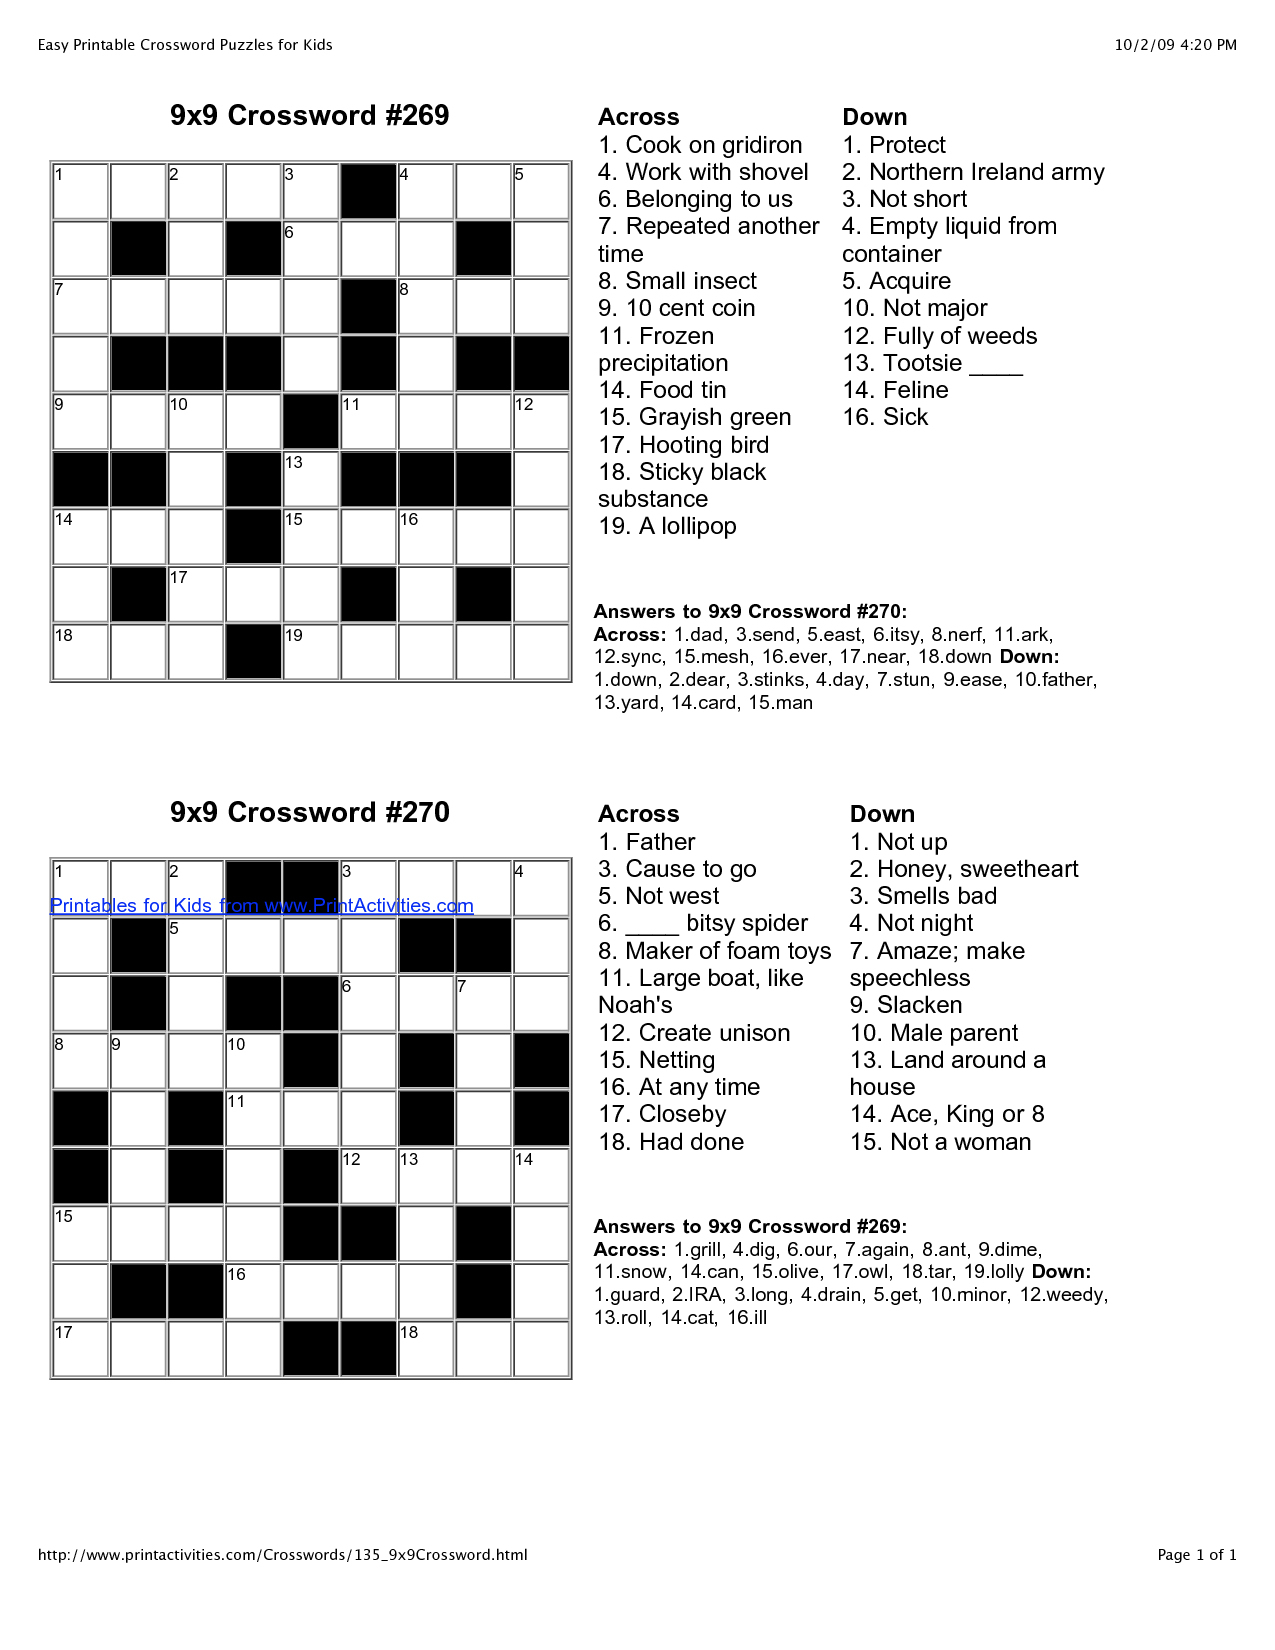 Printable Aarp Crossword Puzzles Printable Crossword Puzzles - Aarp Easy Online Crossword Puzzles